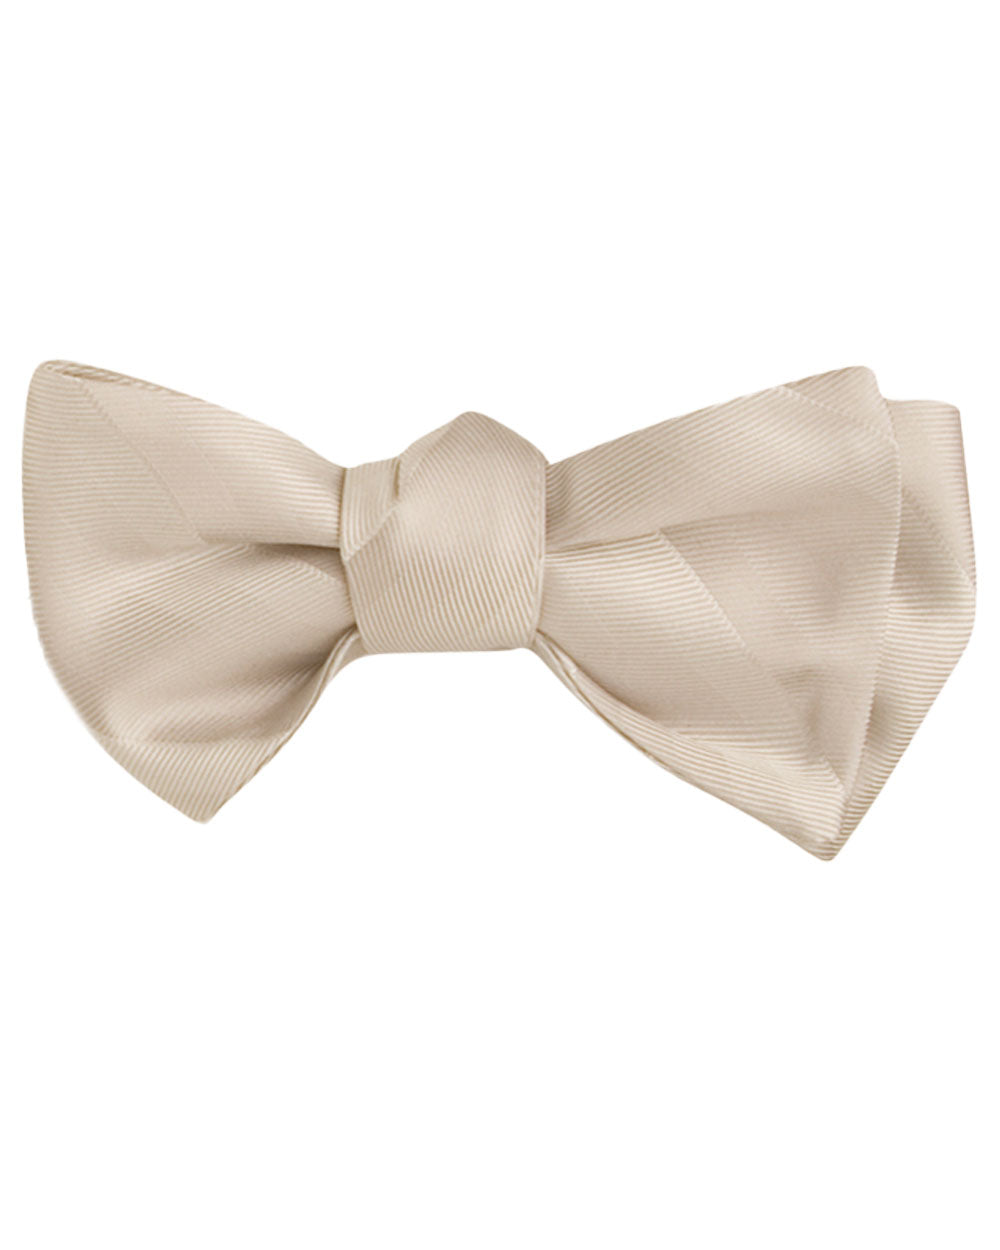 Silver Stripe Self-Tie Bow Tie